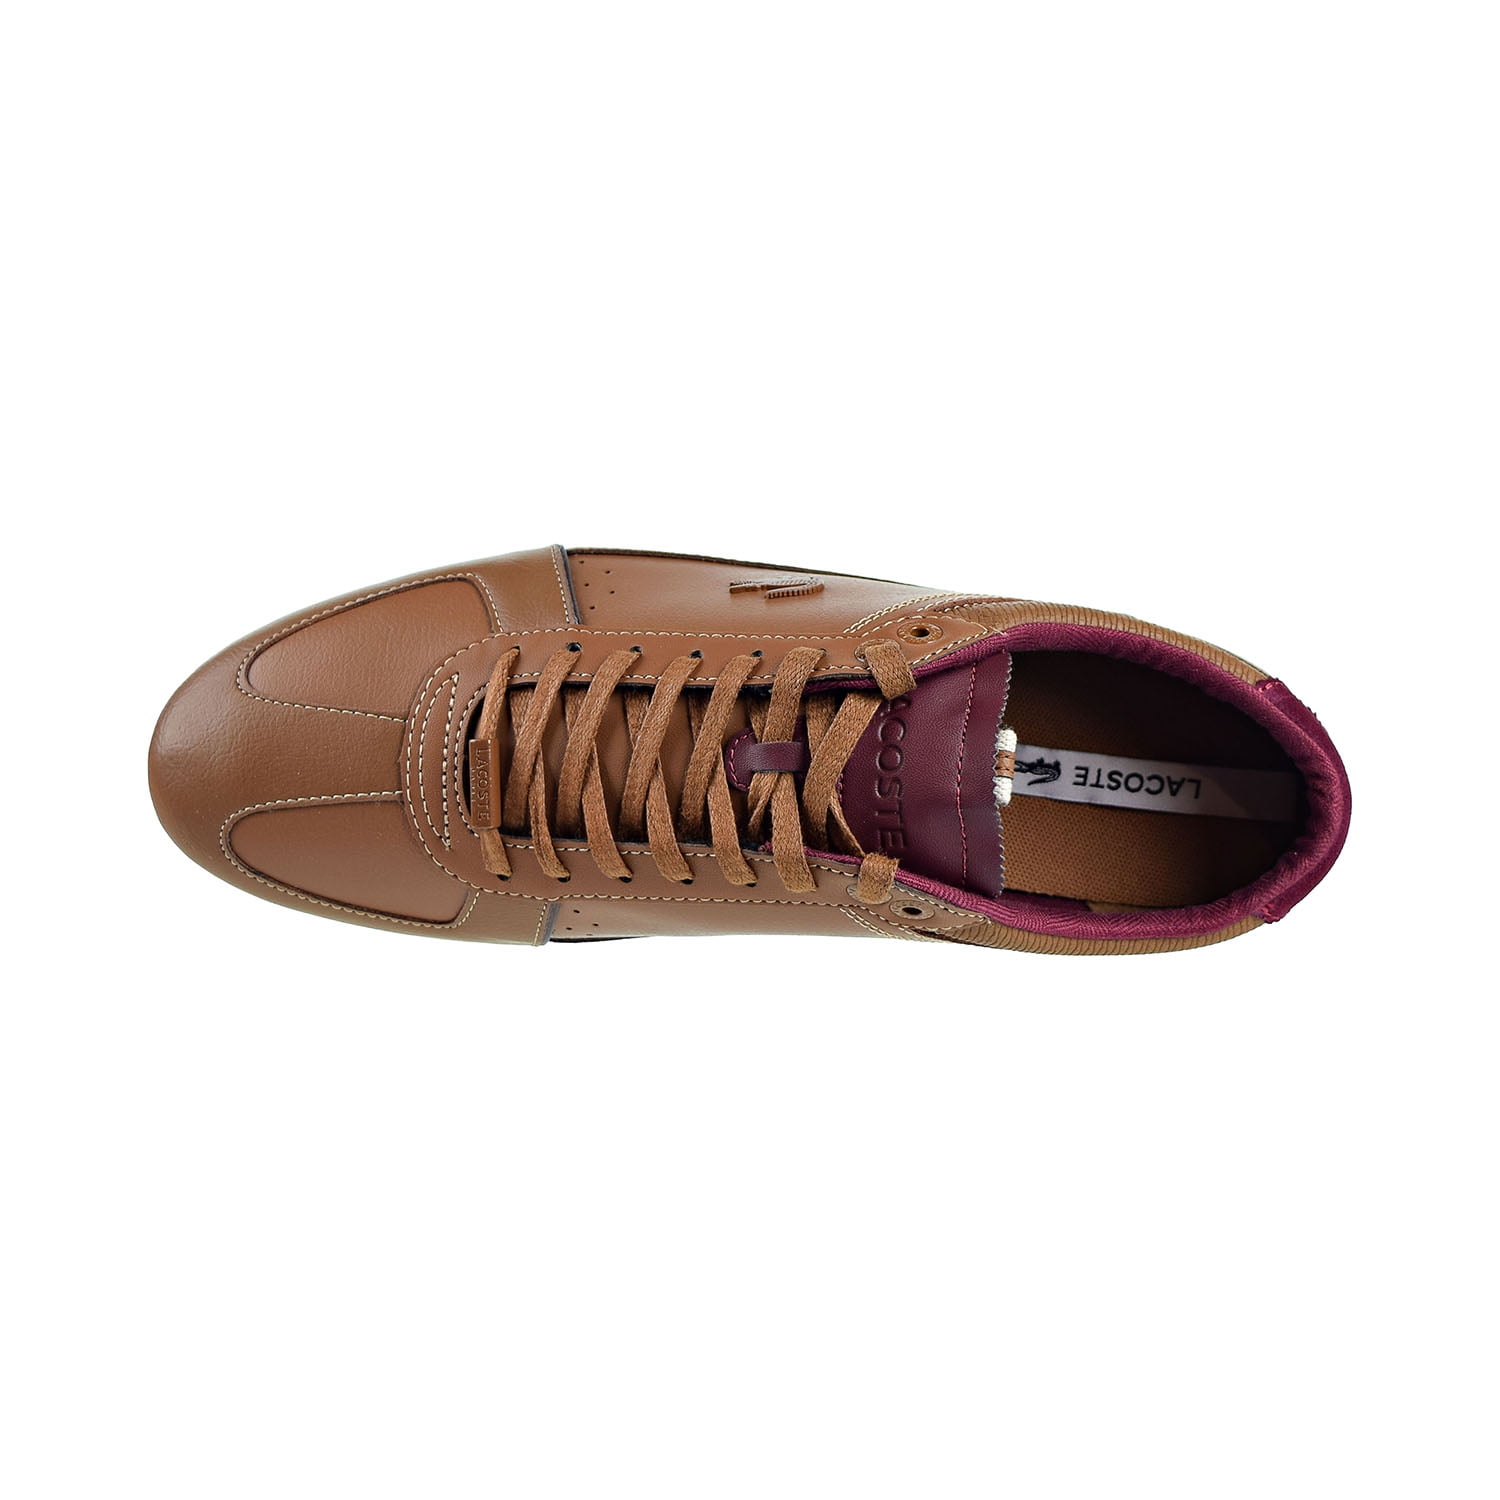 Lacoste Evara 318 2 Cam Men's Shoes Brown/Dark Red 7-36cam0024-br1